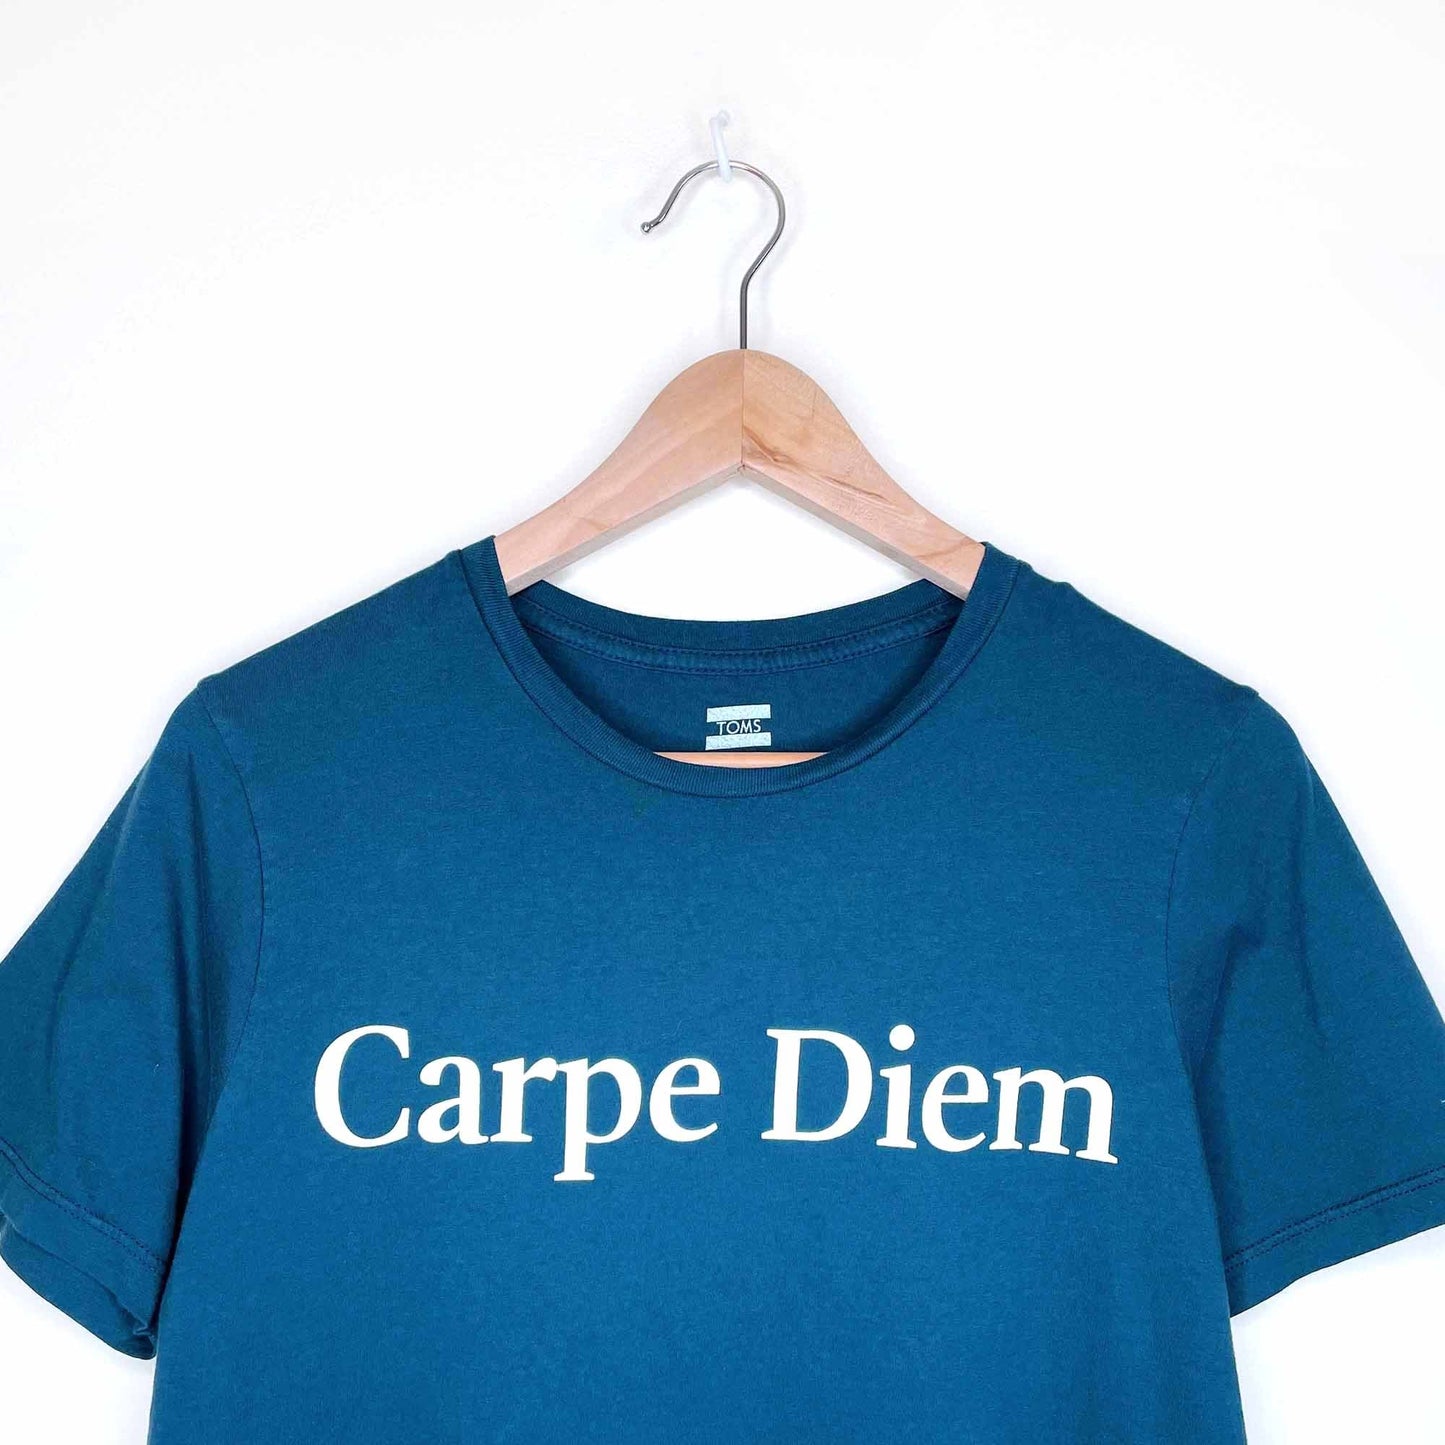 toms carpe diem t-shirt - size xs